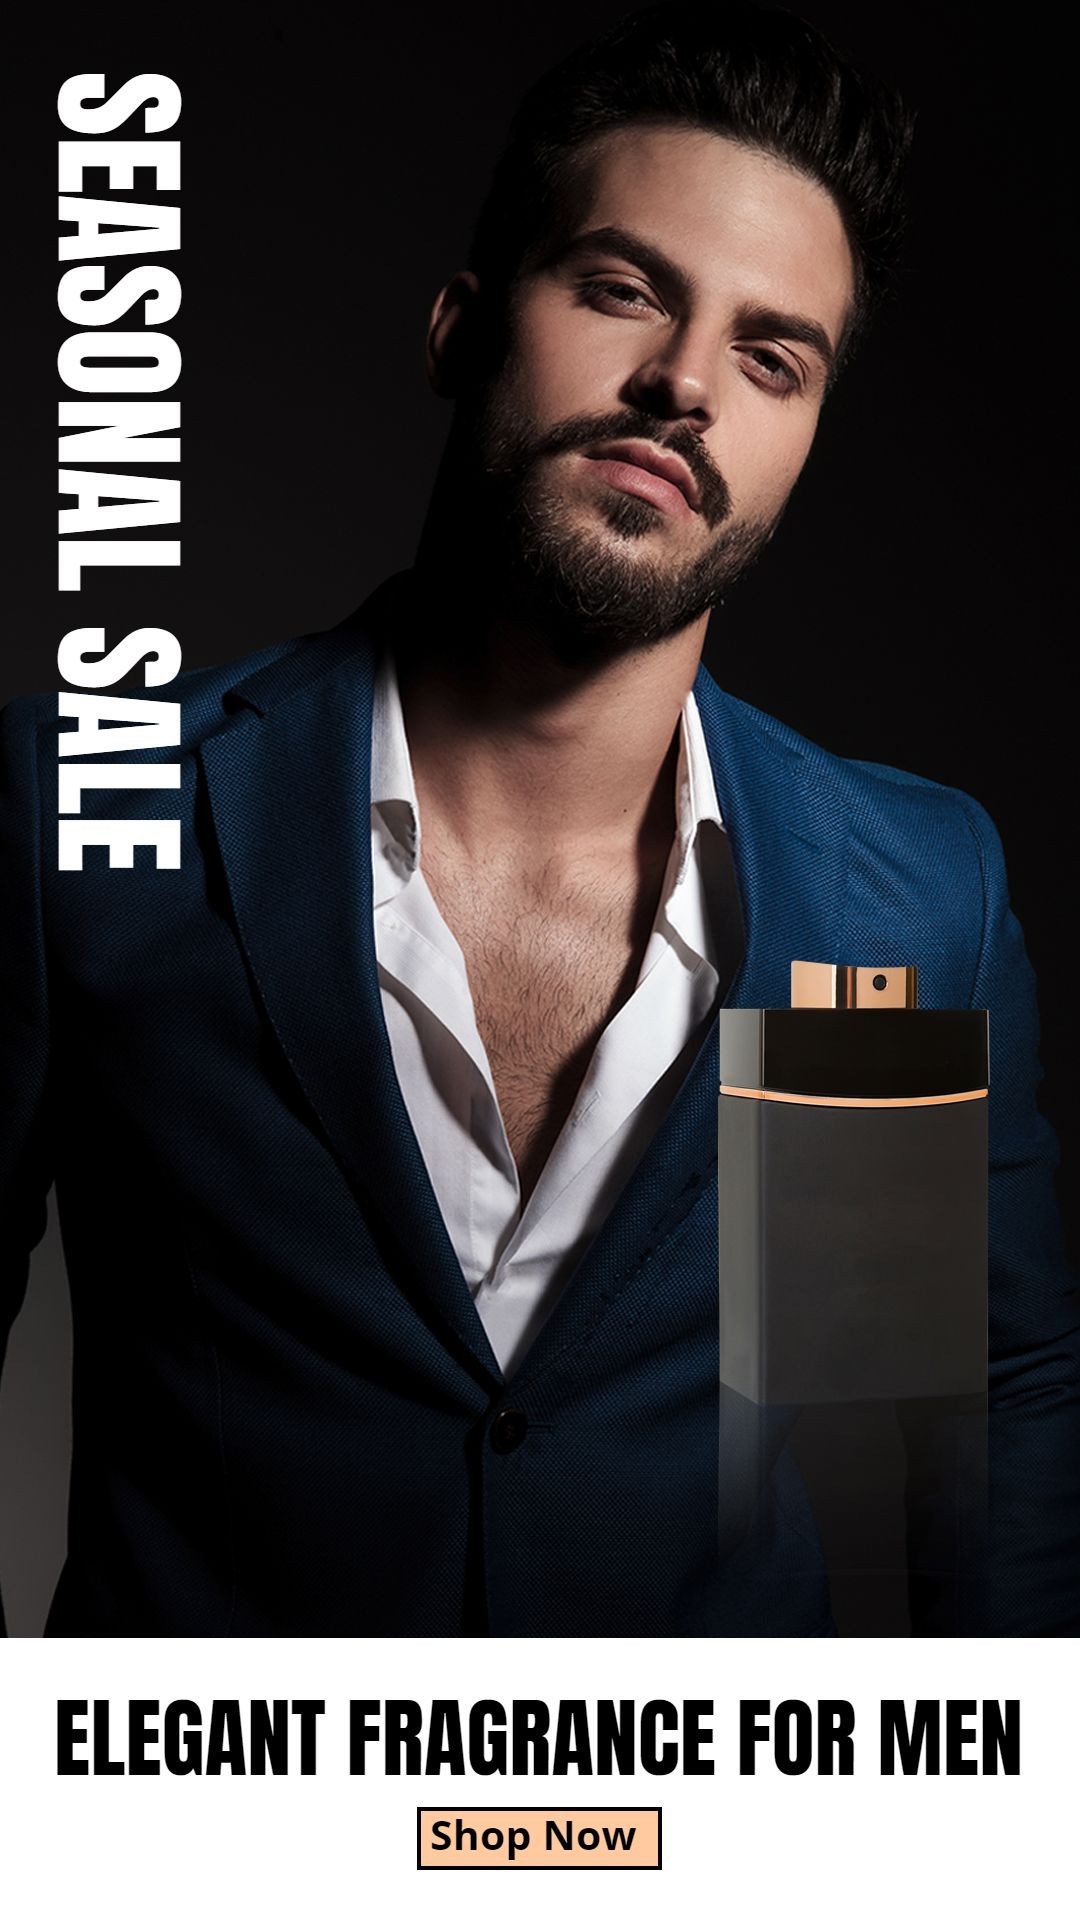 Men's Perfume Fragrance Sale Promotion Ecommerce Story预览效果